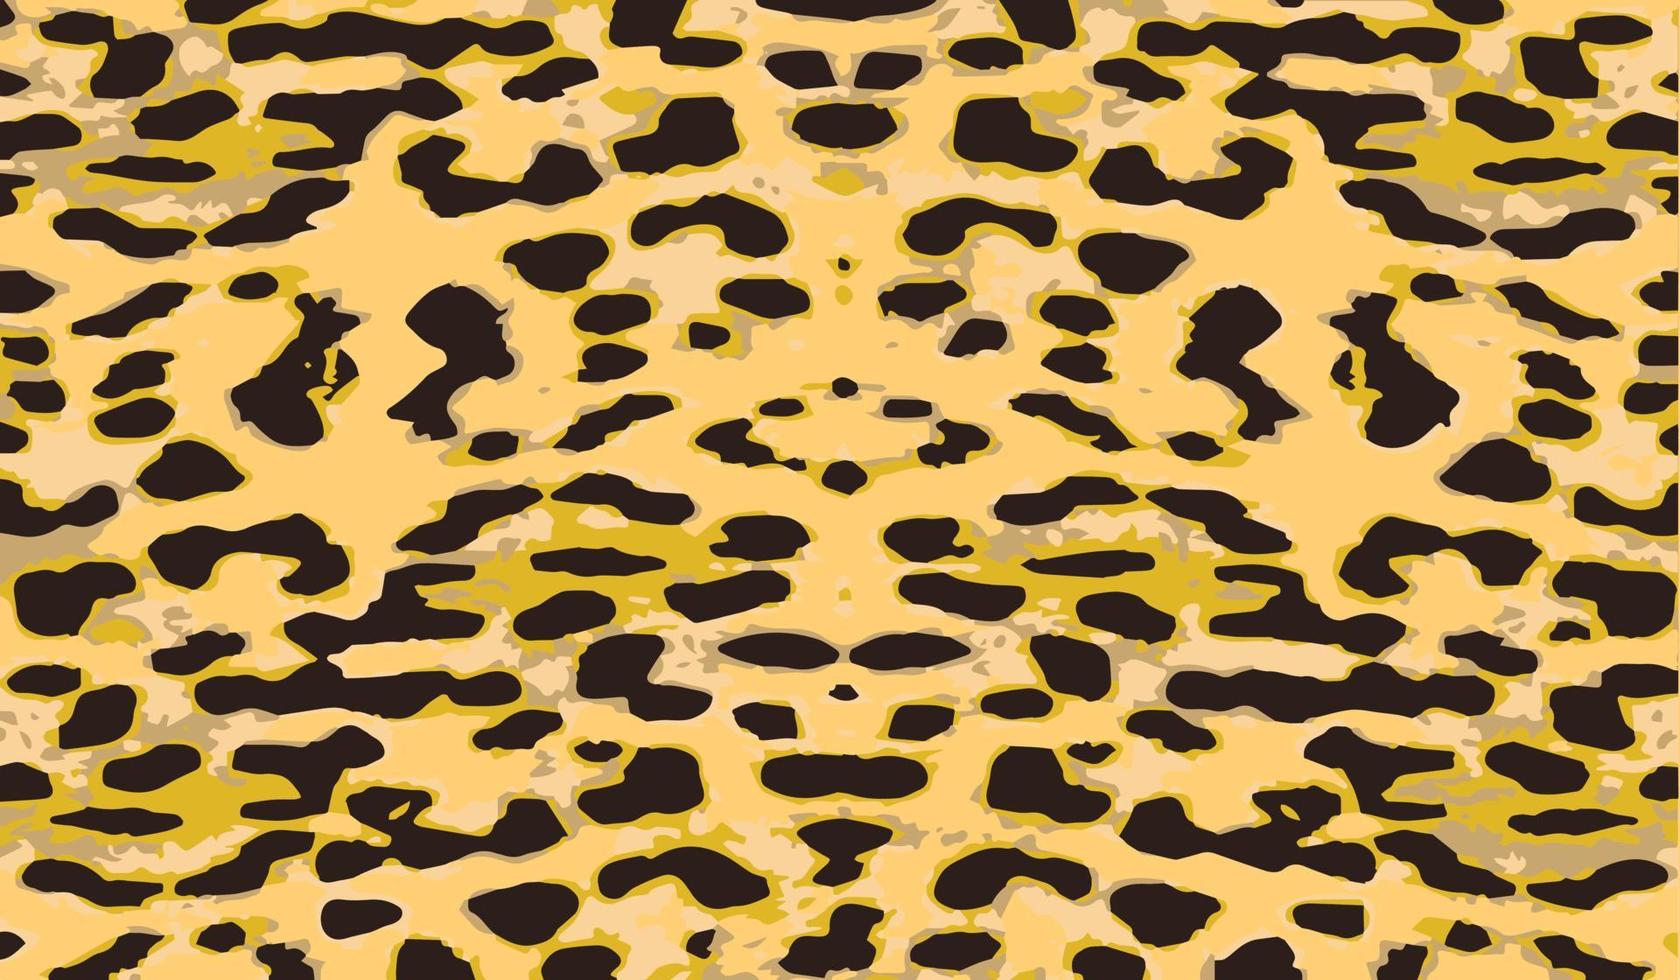 Leopard skin closeup texture vector , vector background illustration